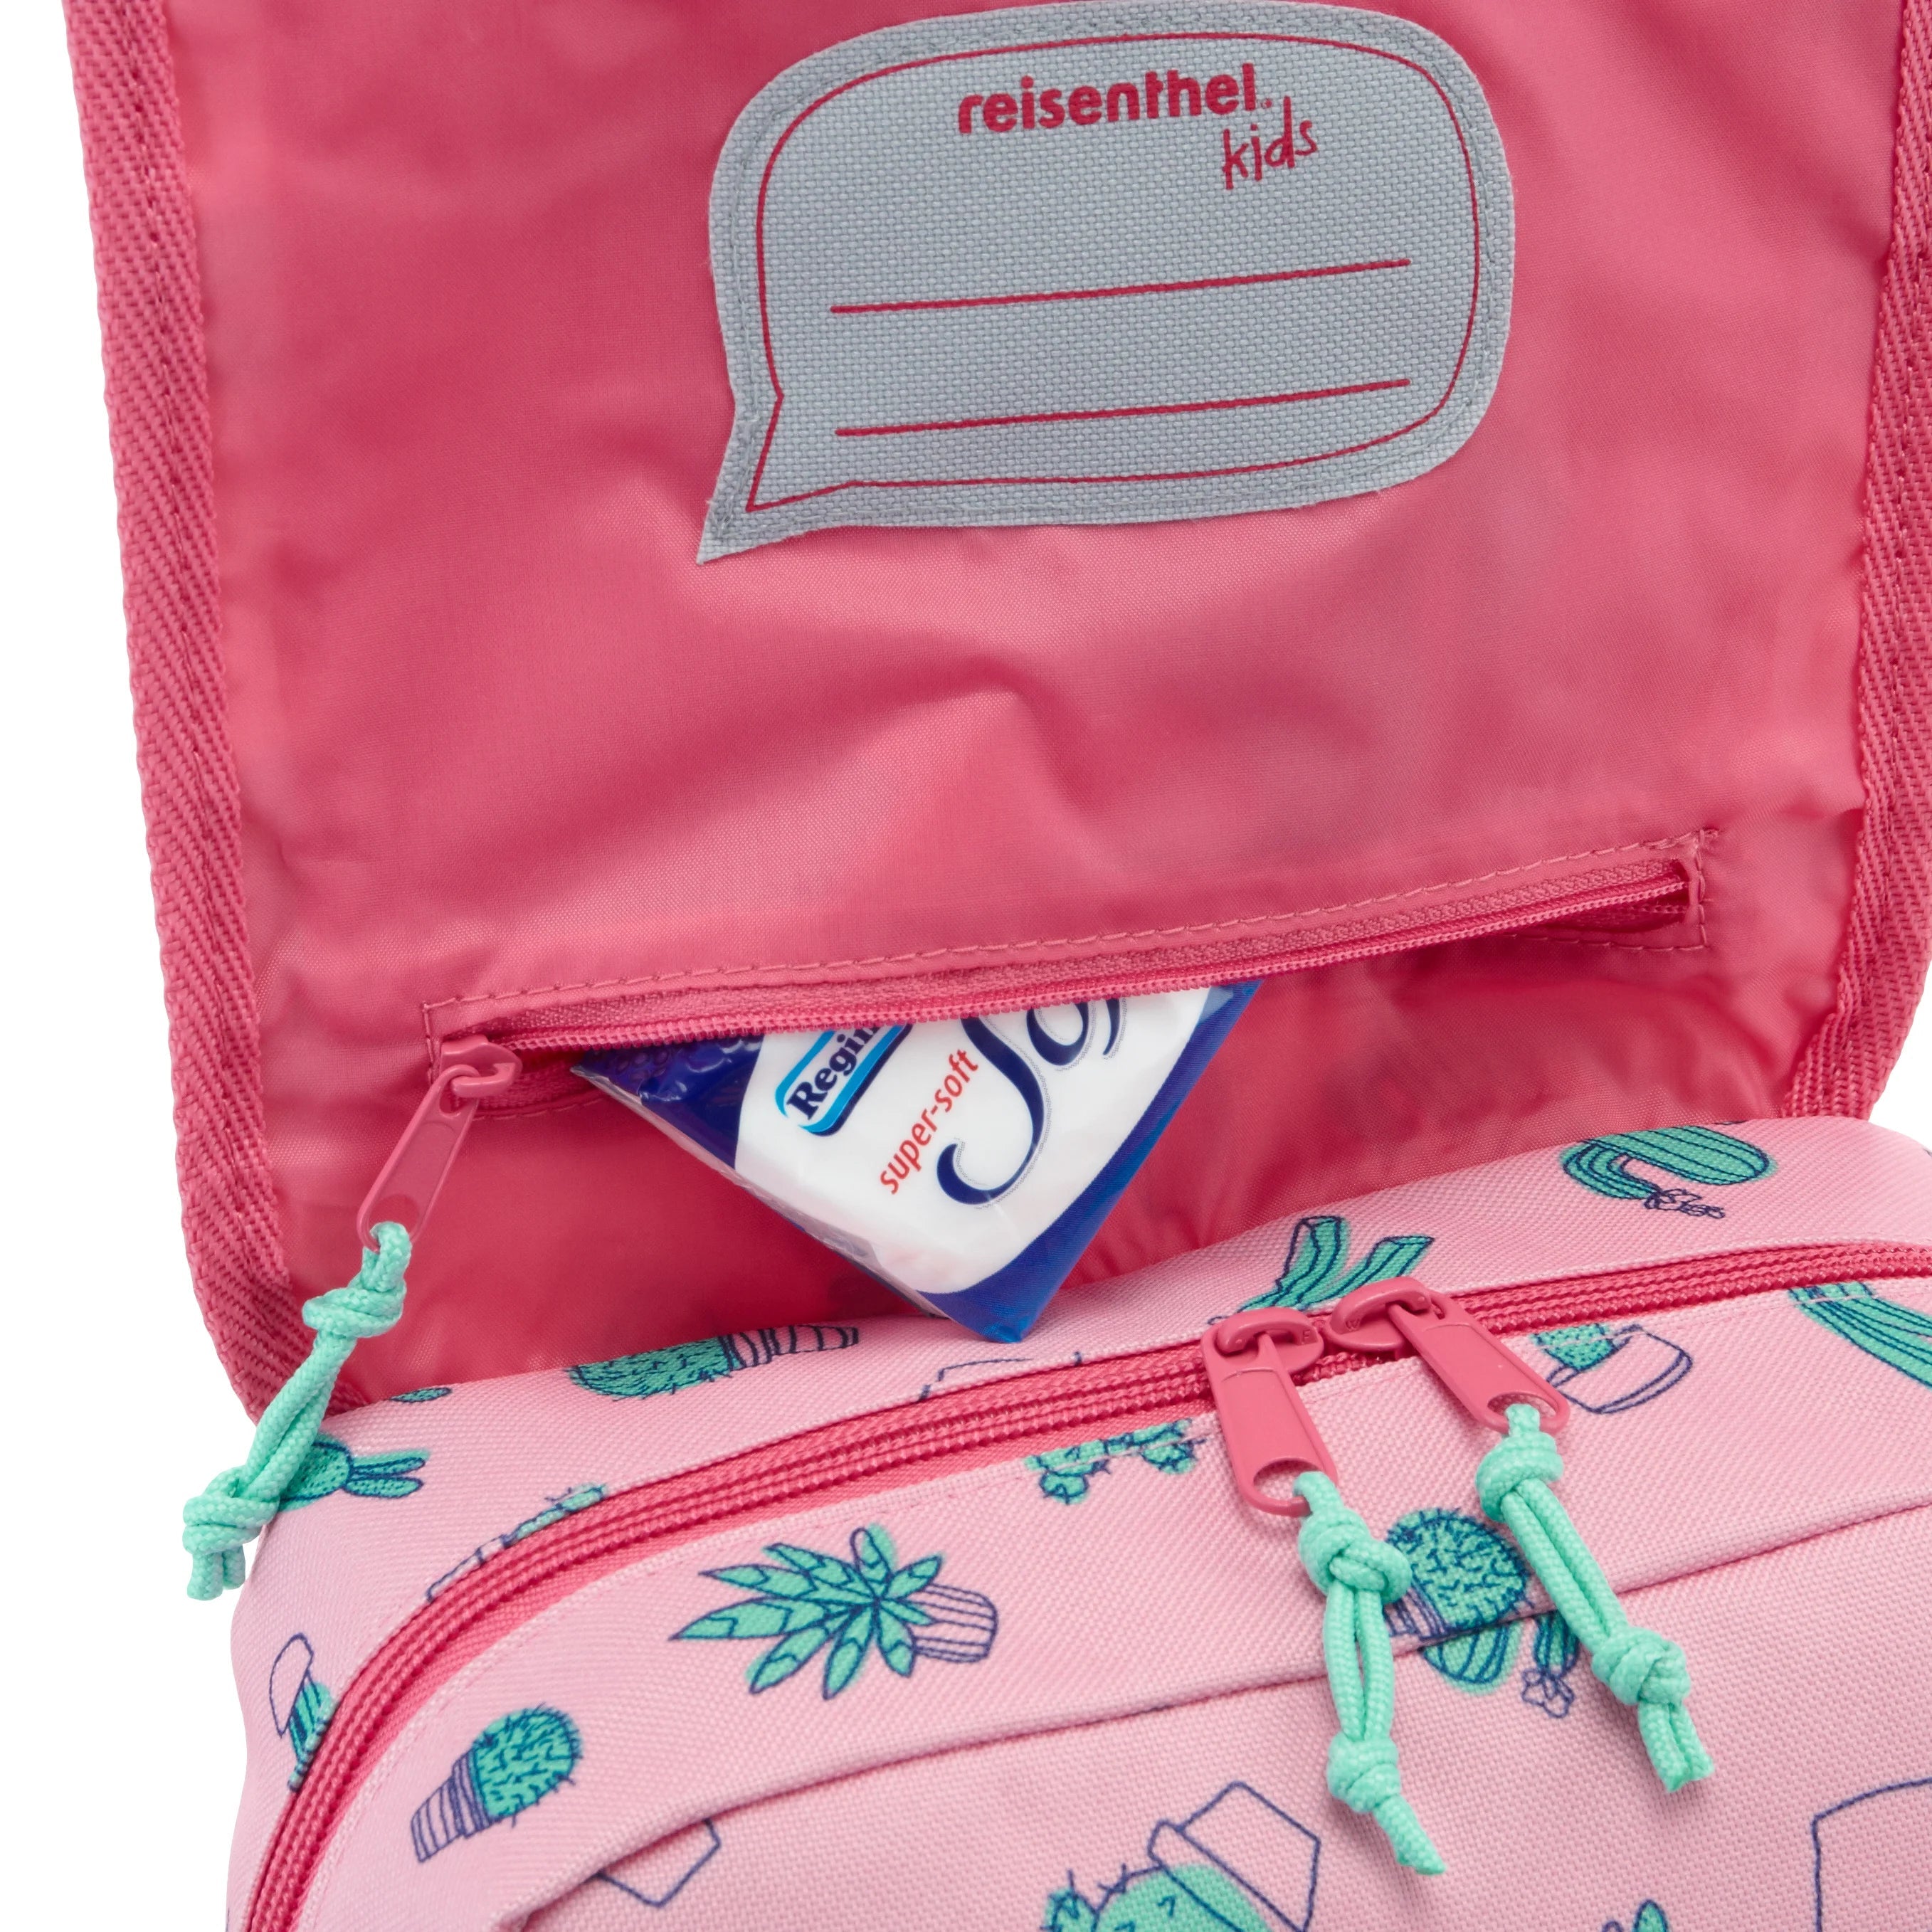 Reisenthel Kids Backpack Rucksack 28 cm - panda dots pink